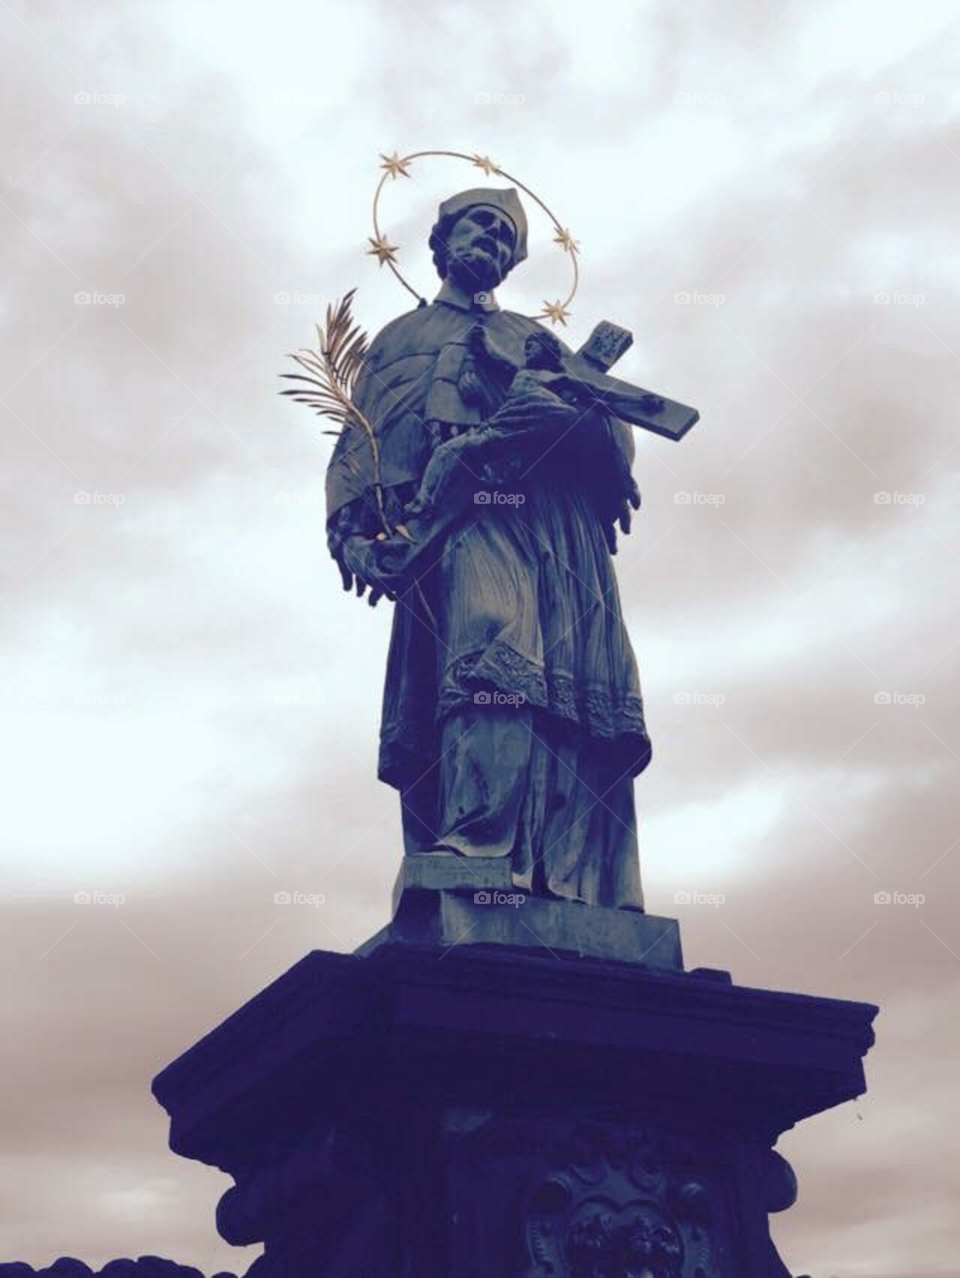 Saint in Prague